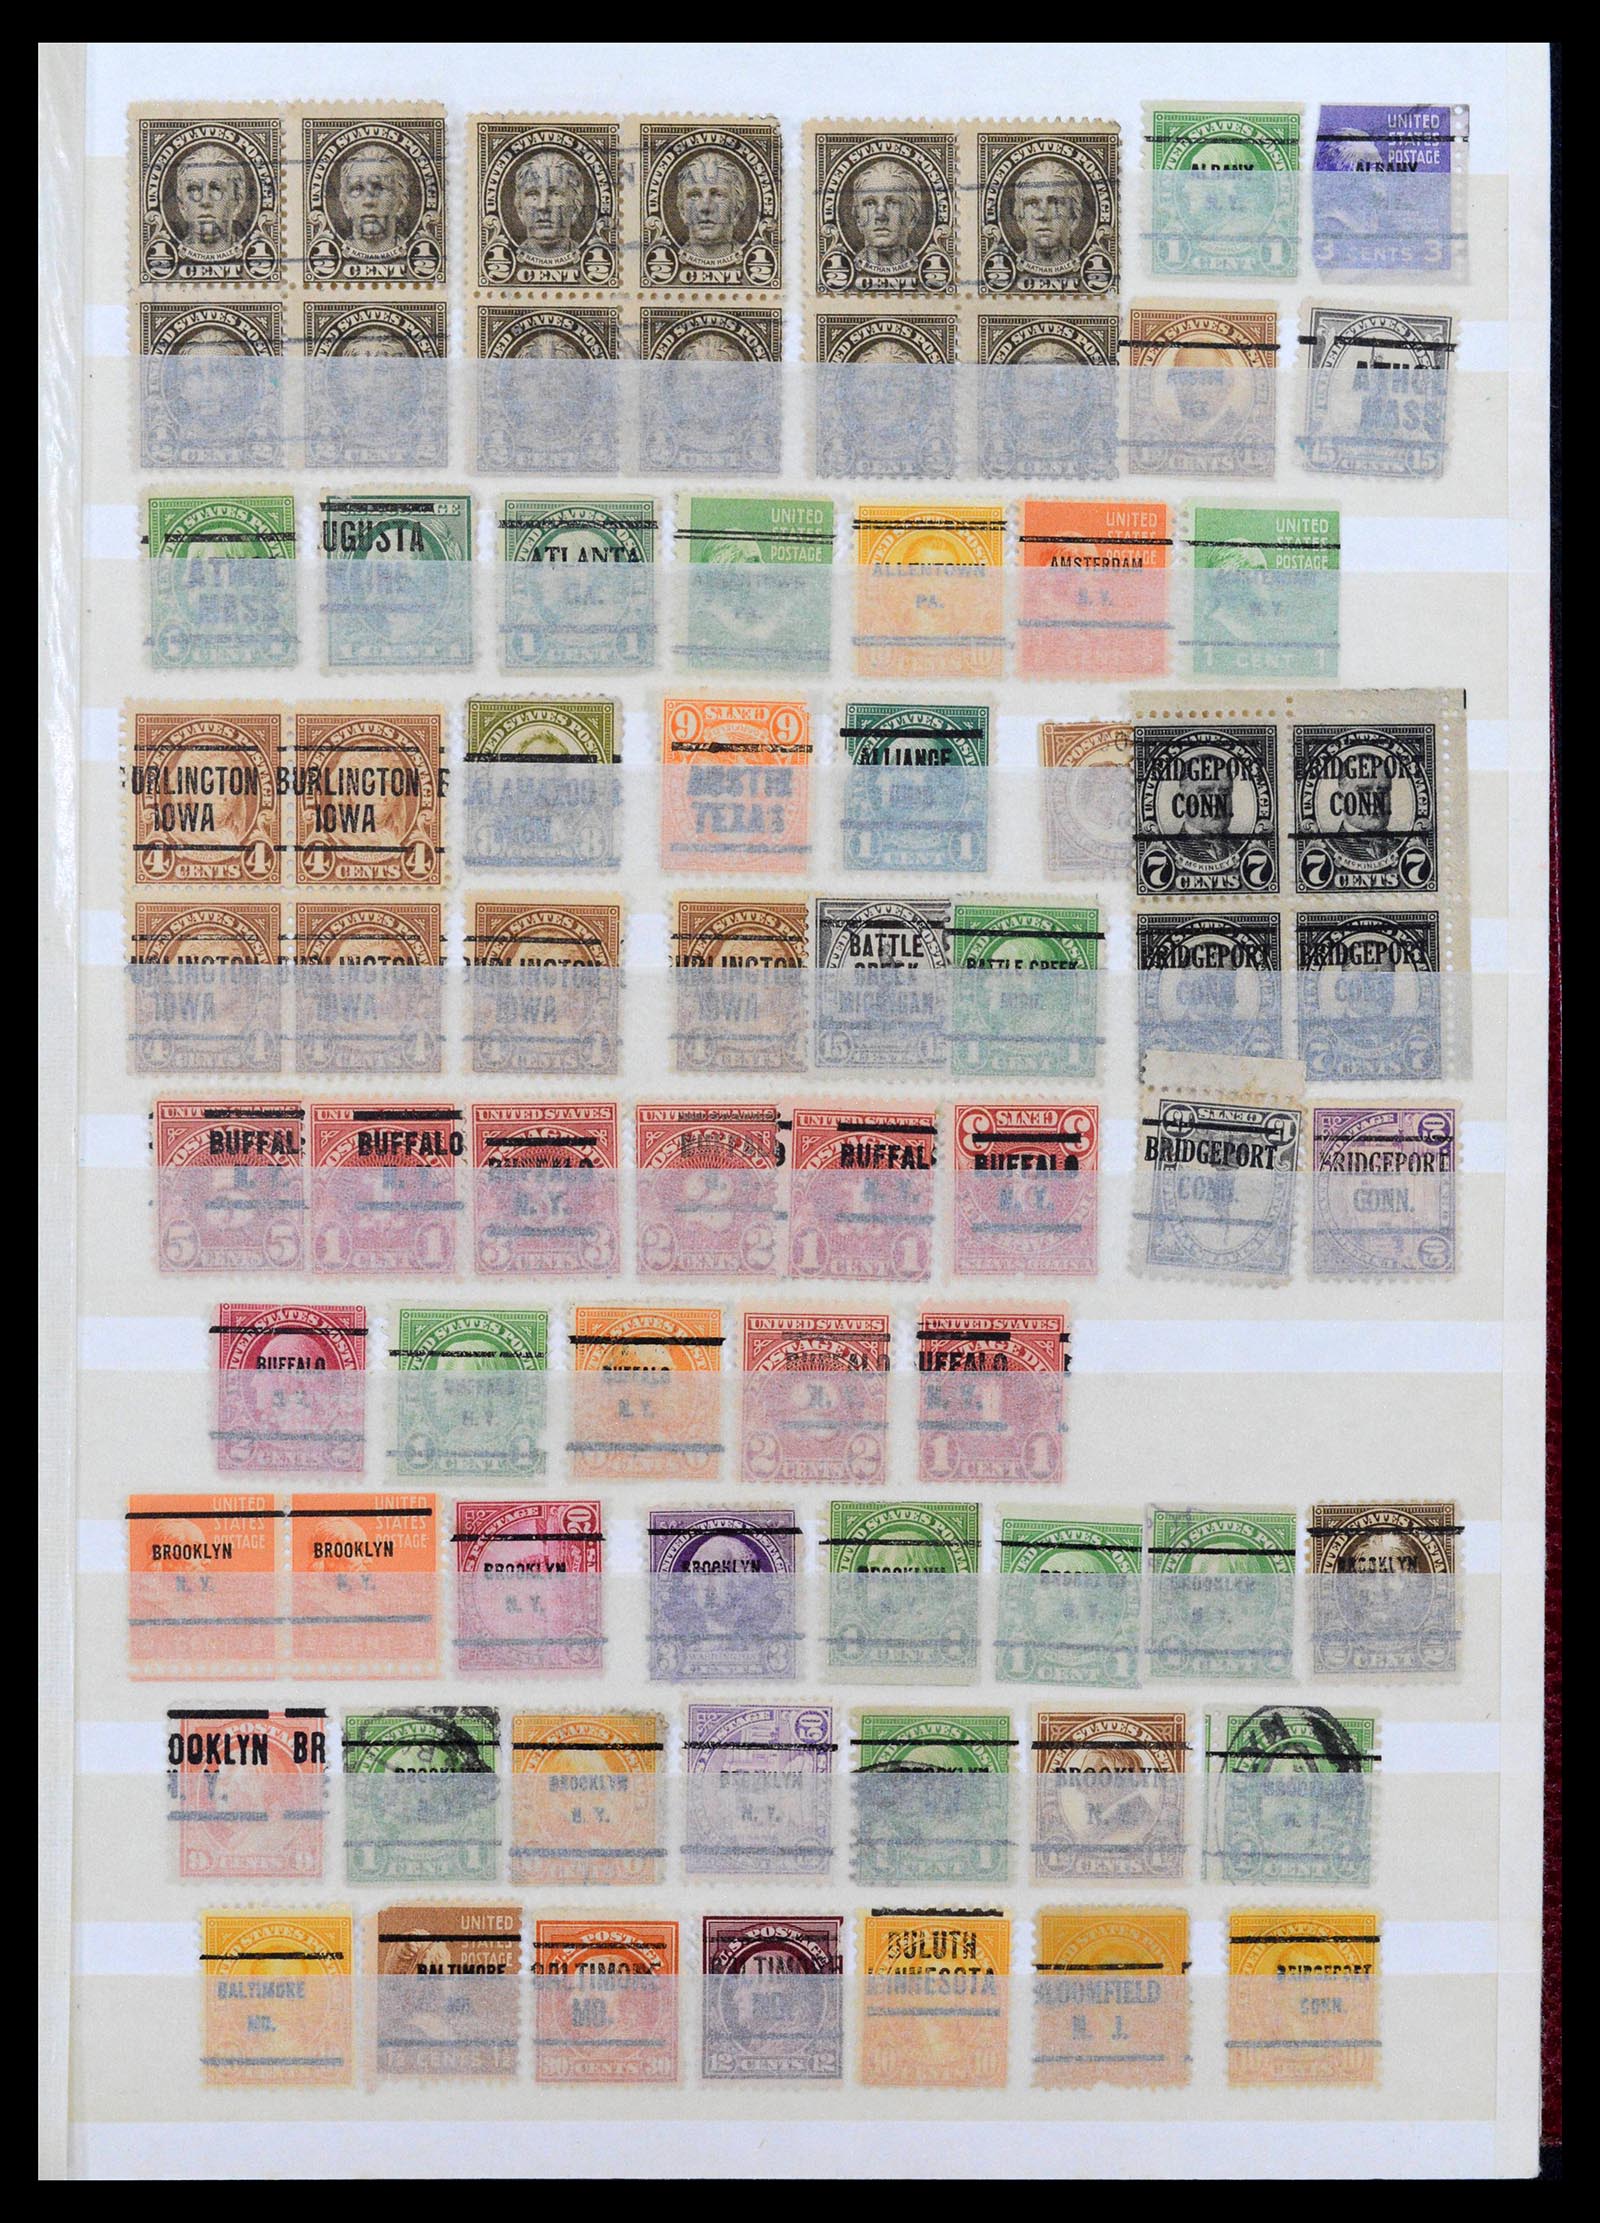 39366 0001 - Stamp collection 39366 USA precancels 1892-1940.